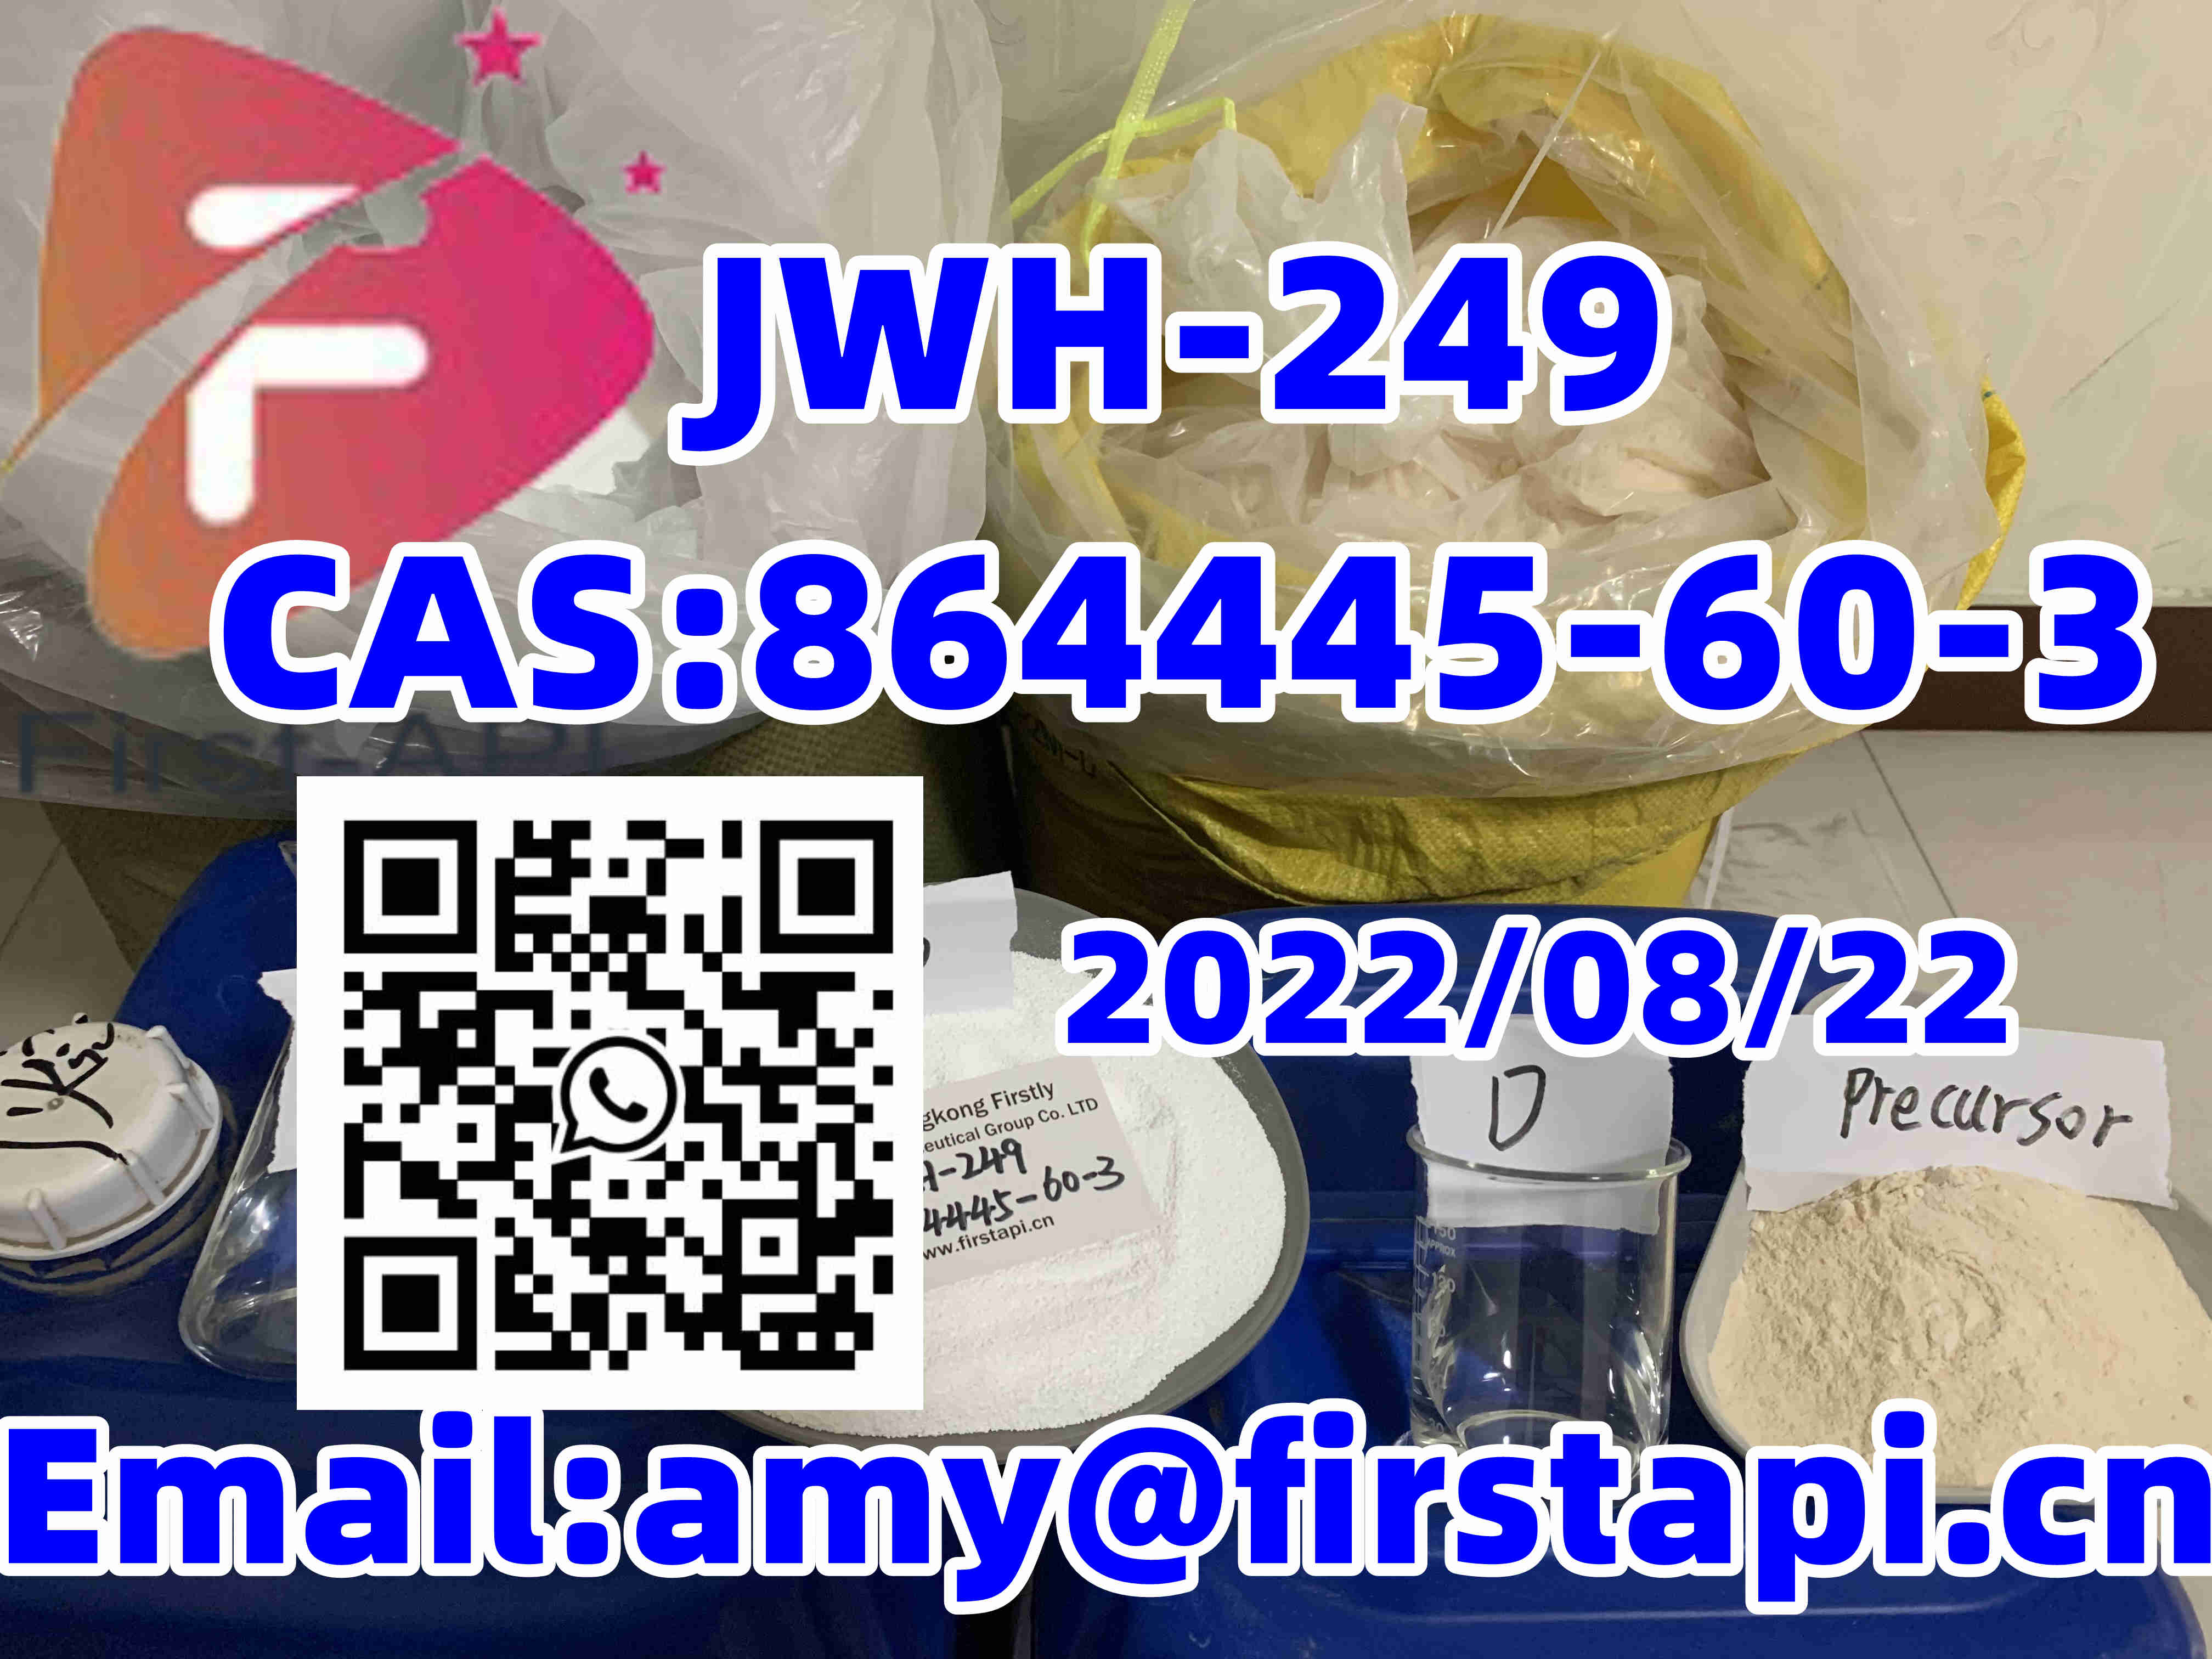 CAS:864445-60-3,JWH-249,high quality,low price - photo